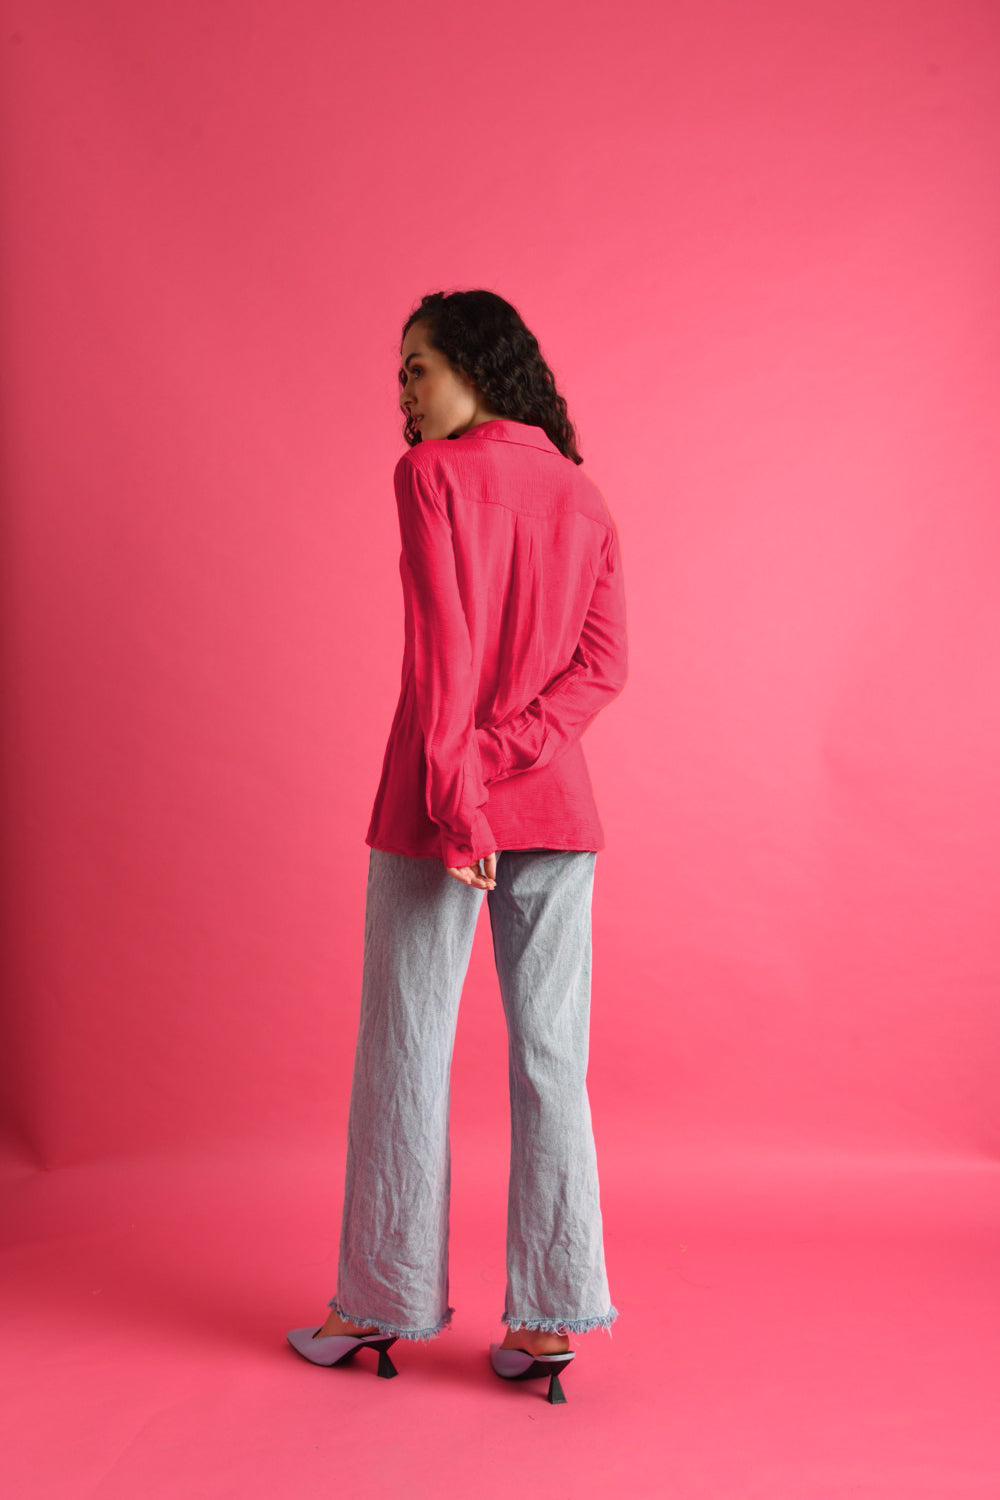 deluxe embellished pink shirt  